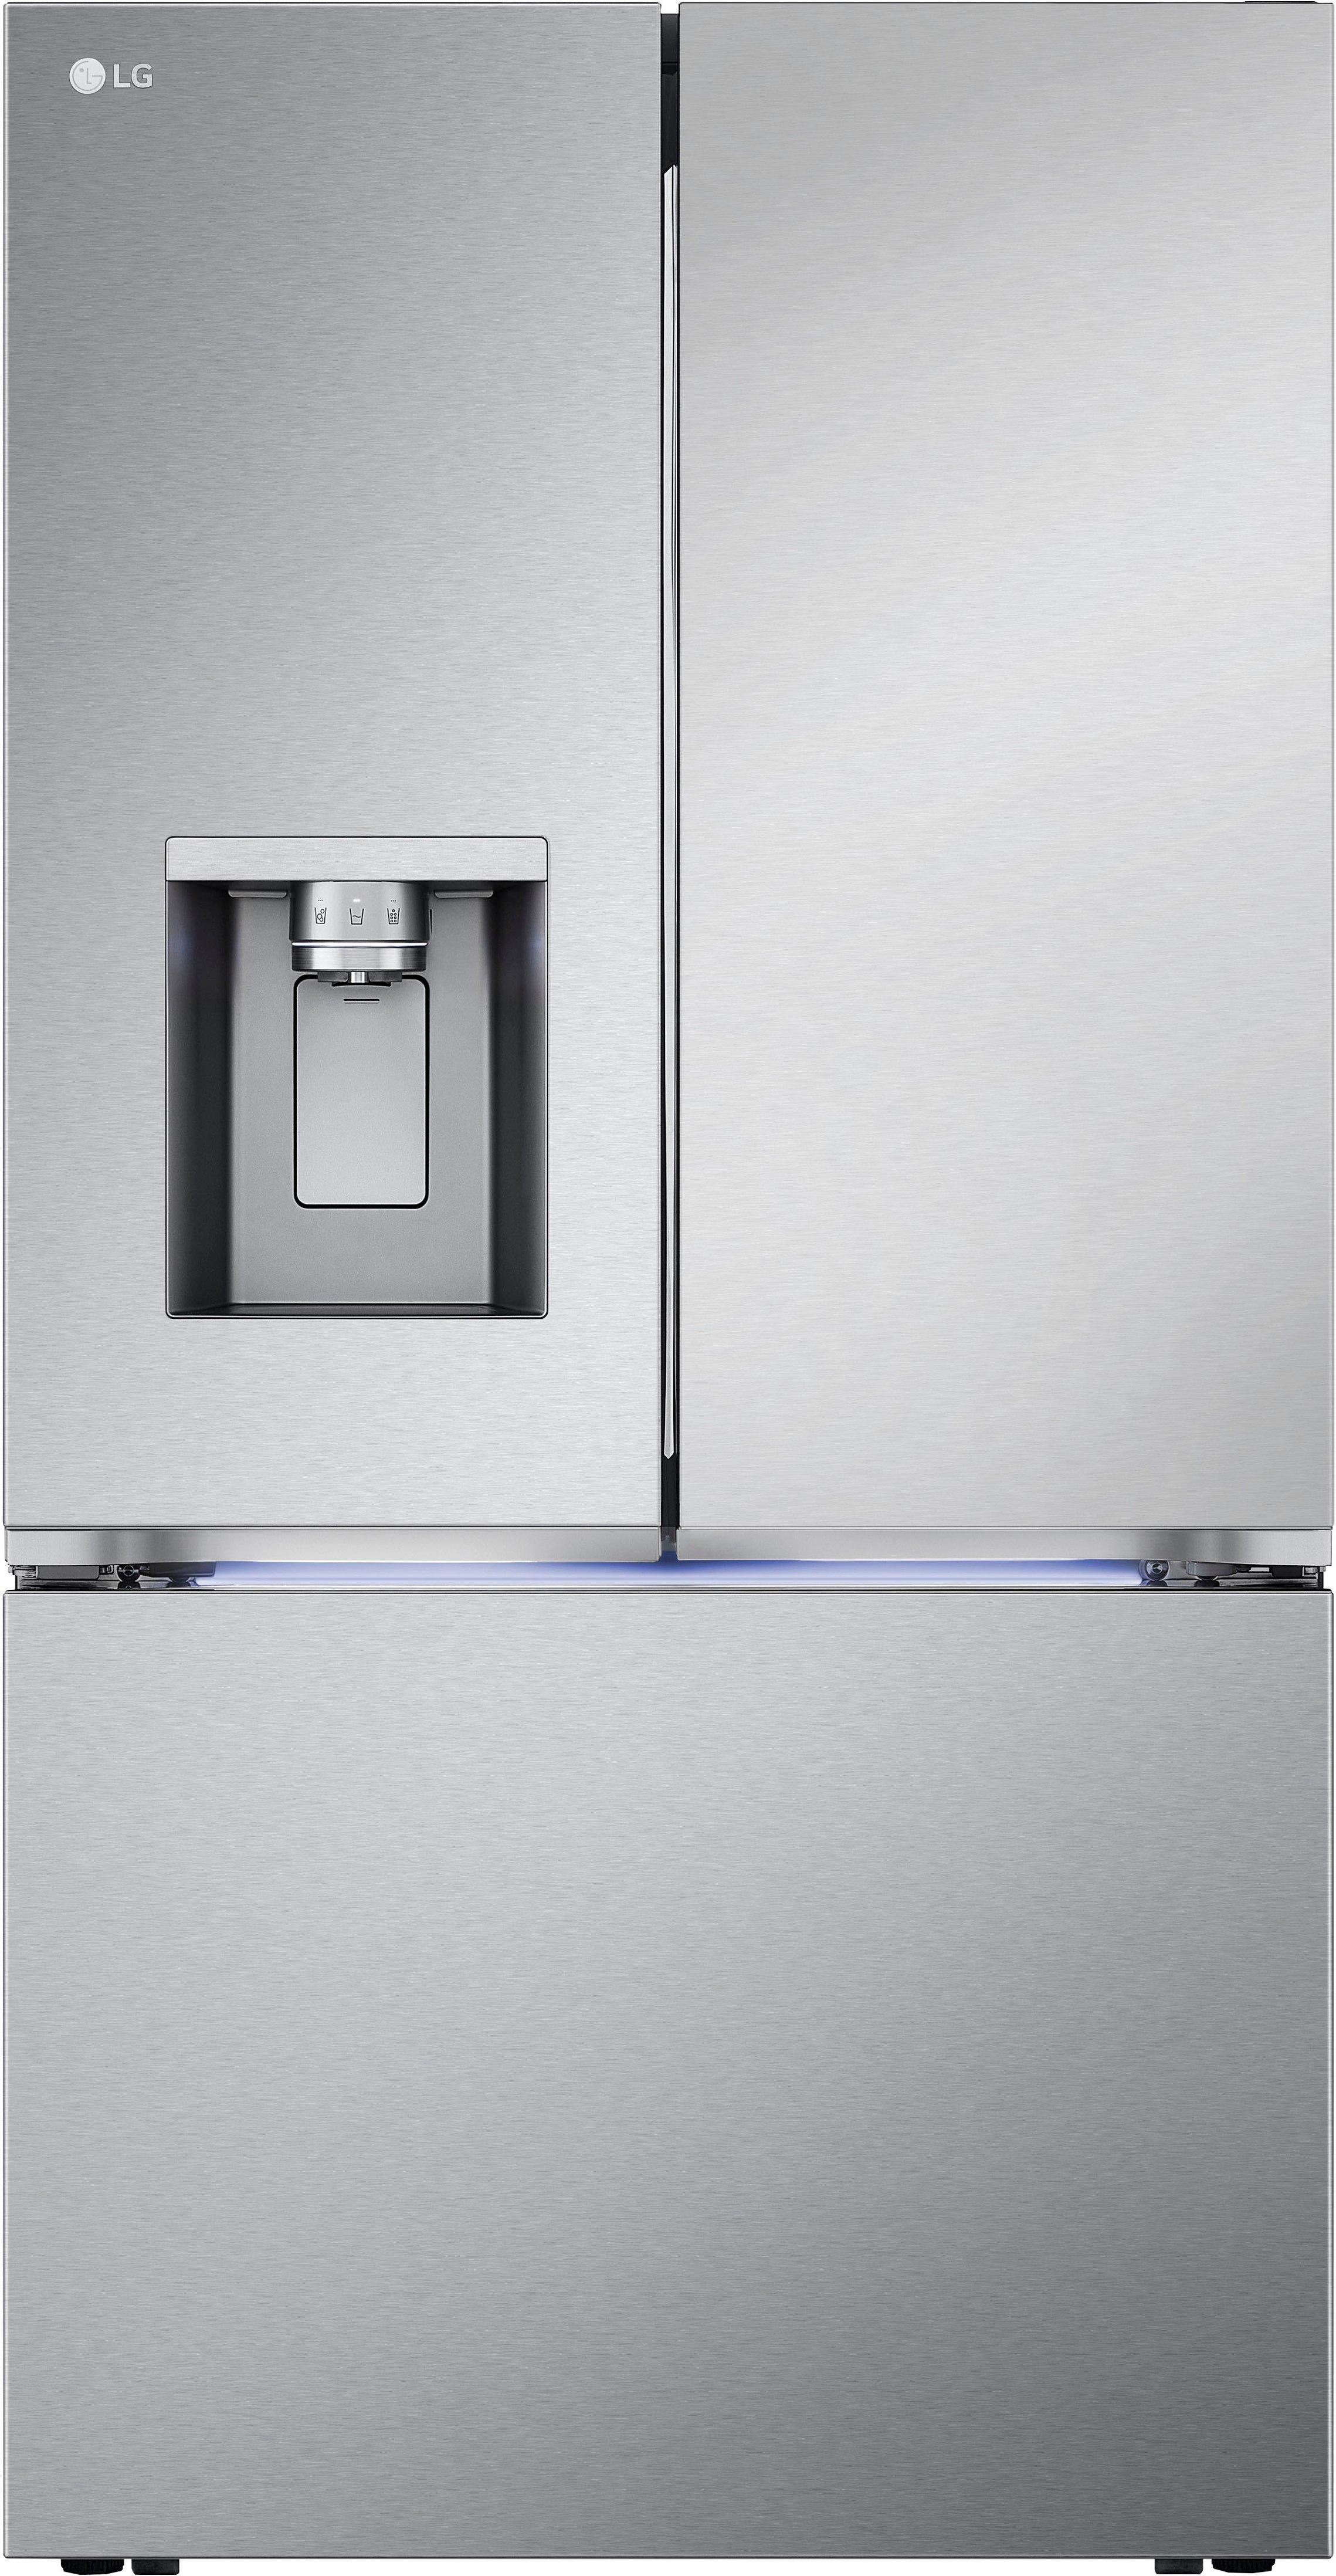 Maxx Cold X-Series Reach-In 1-Door Freezer Silver